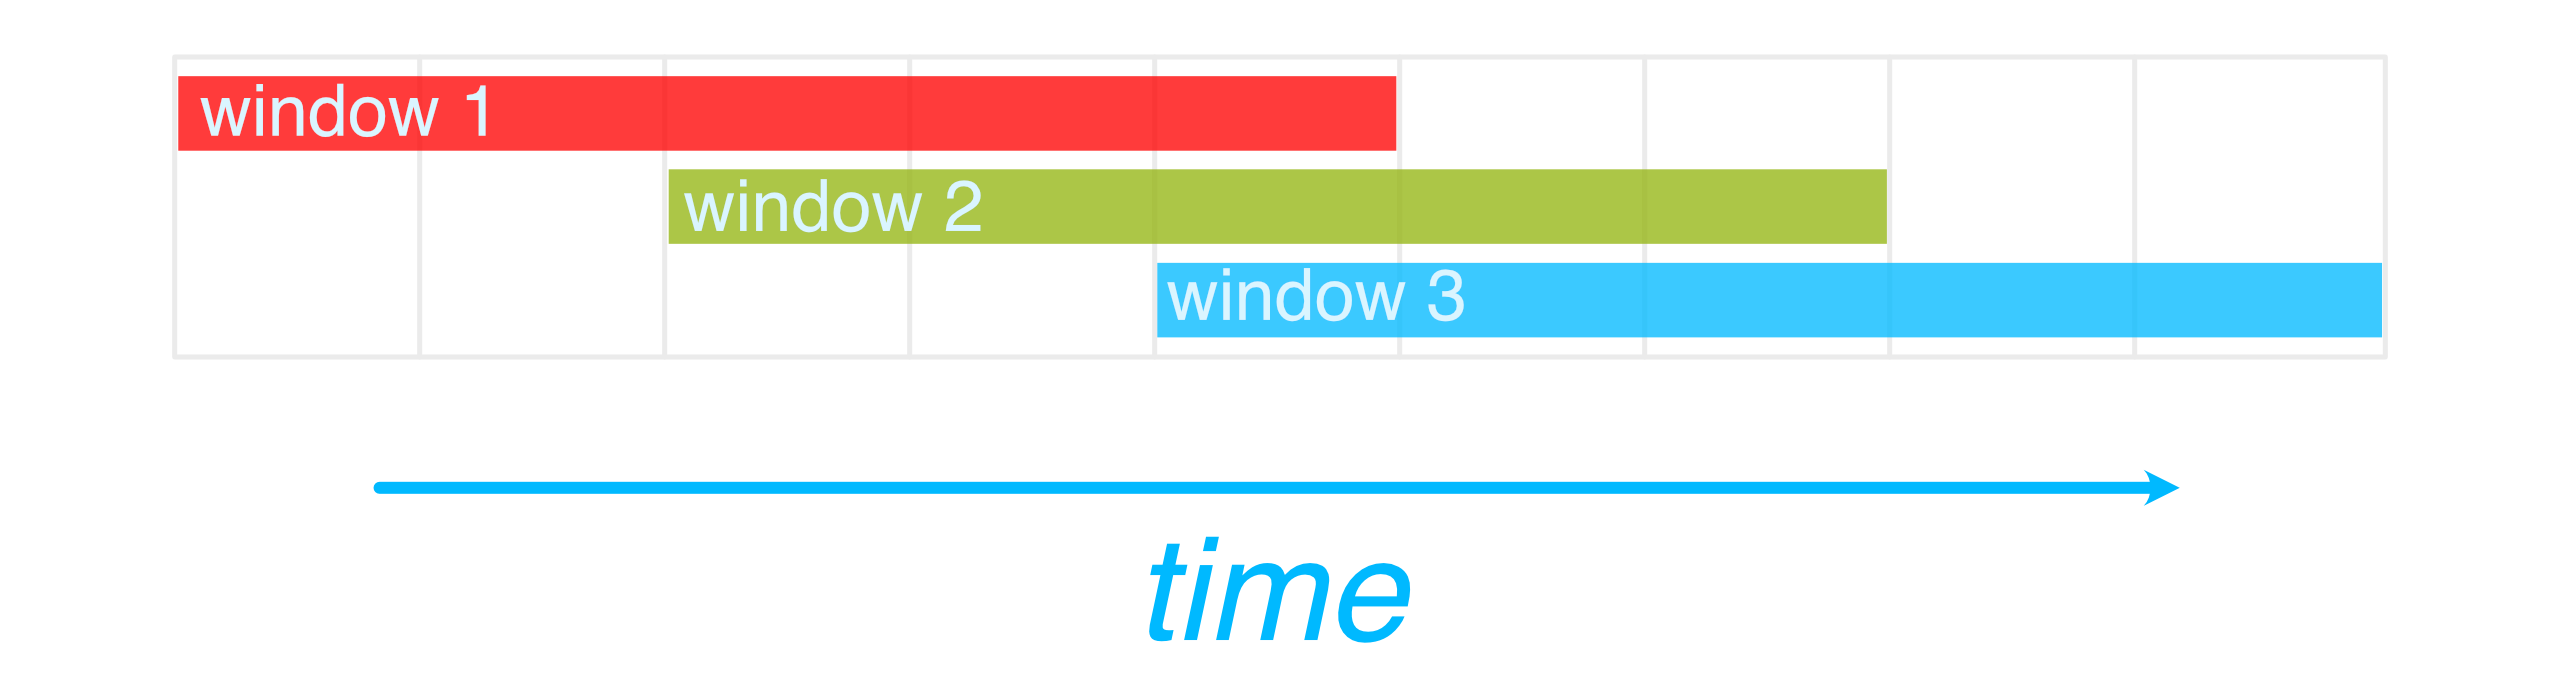 Diagram showing sliding windows